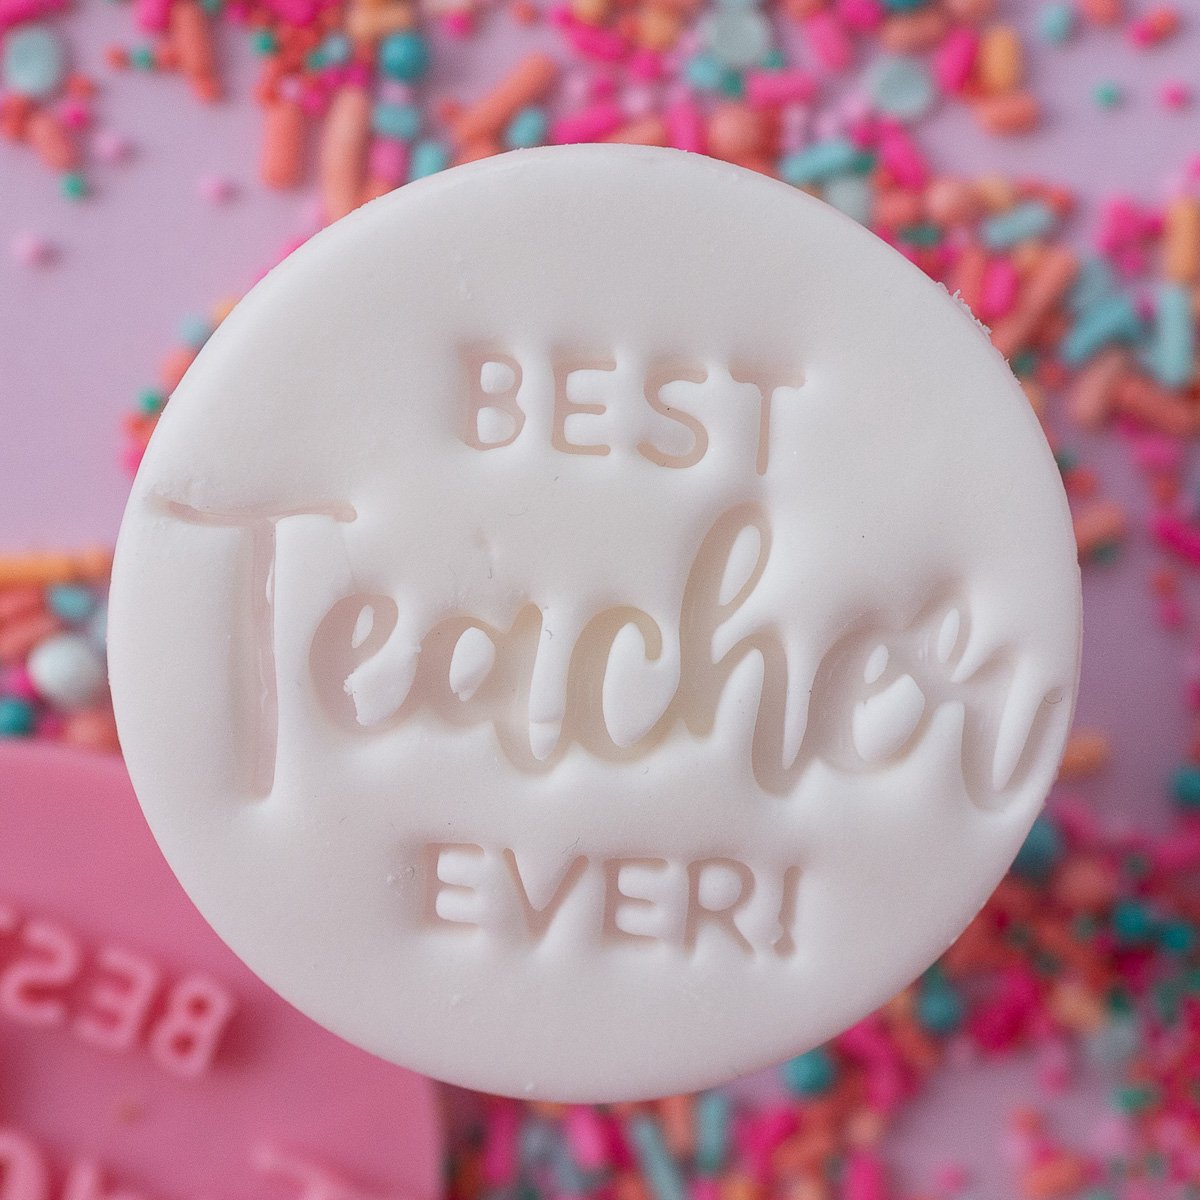 Best teacher ever - stamp | School